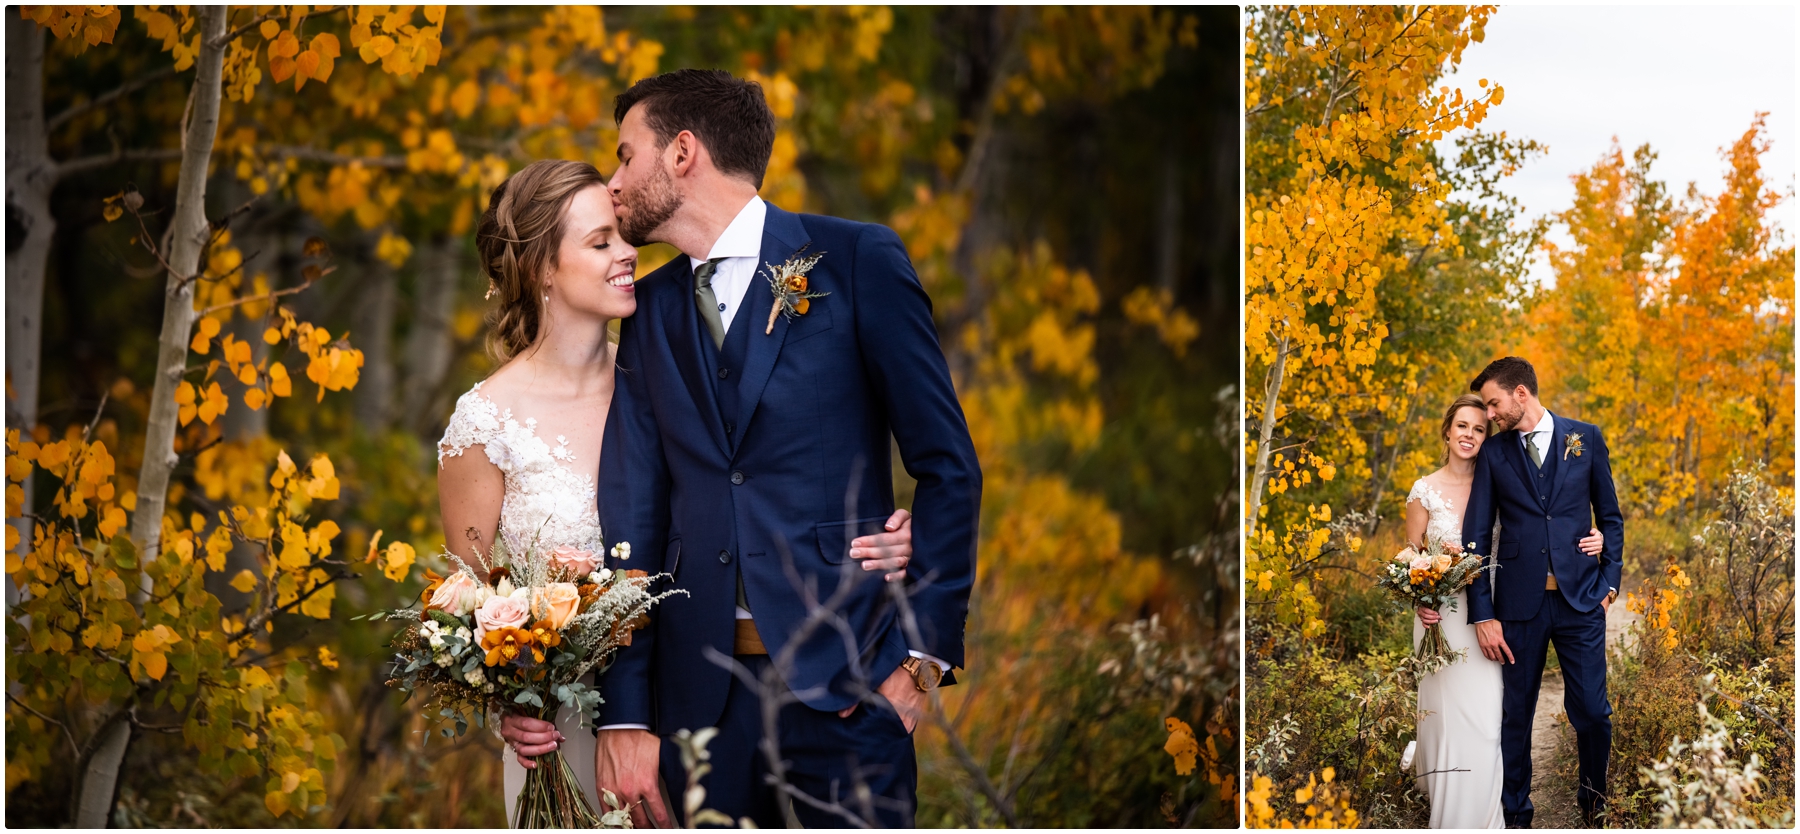 Calgary Autumn Wedding Photography- Bride & Groom